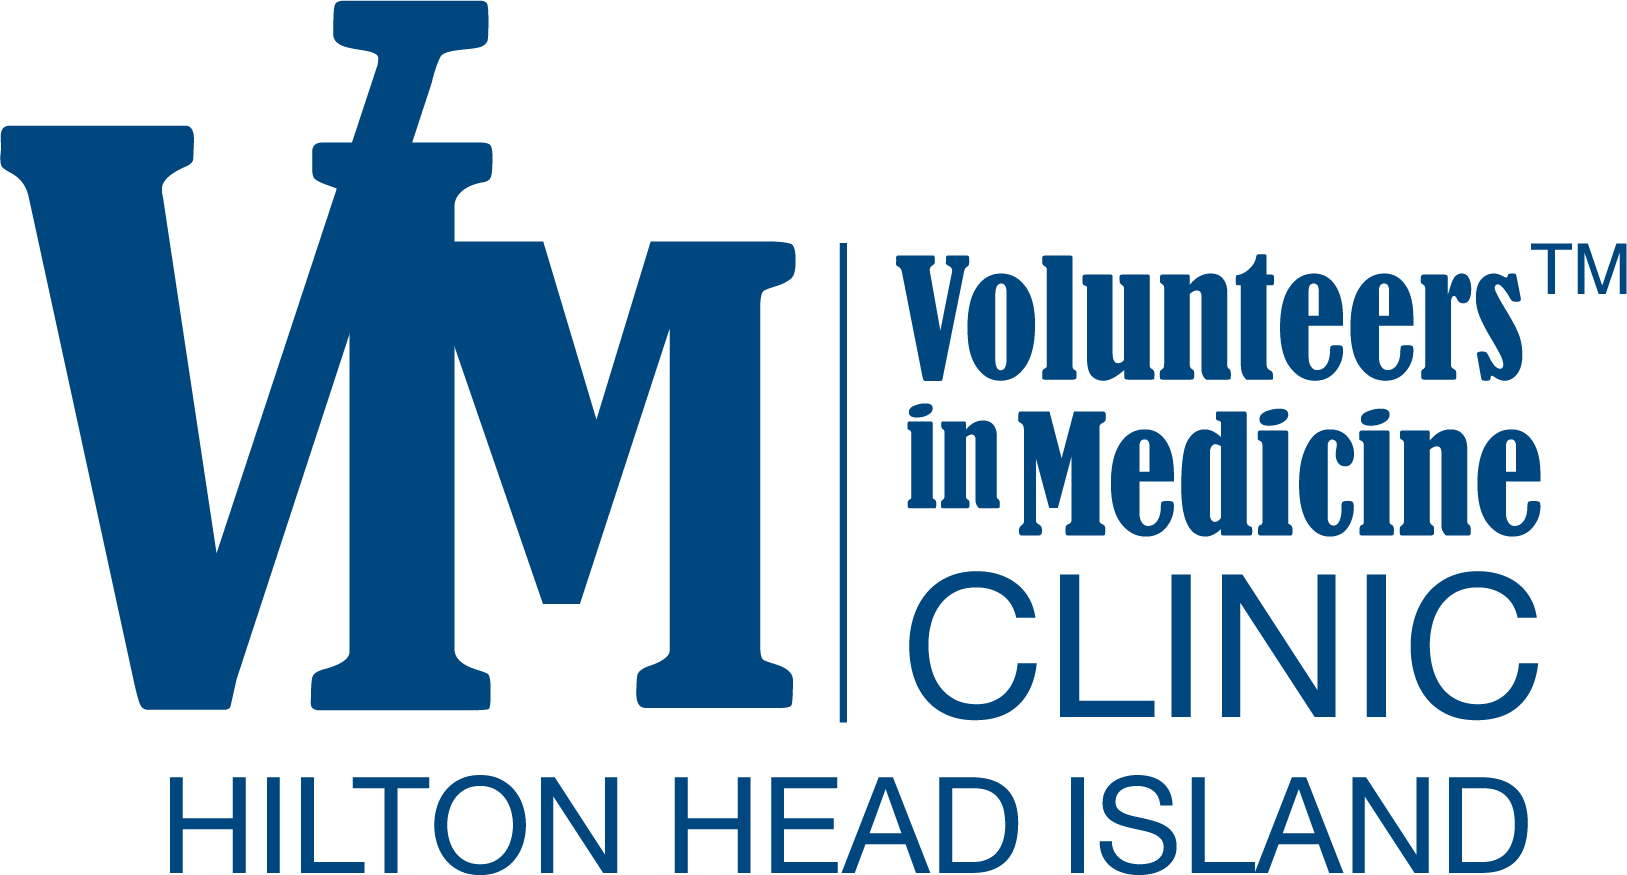 Volunteers in Medicine Hilton Head Island - Medical Clinic